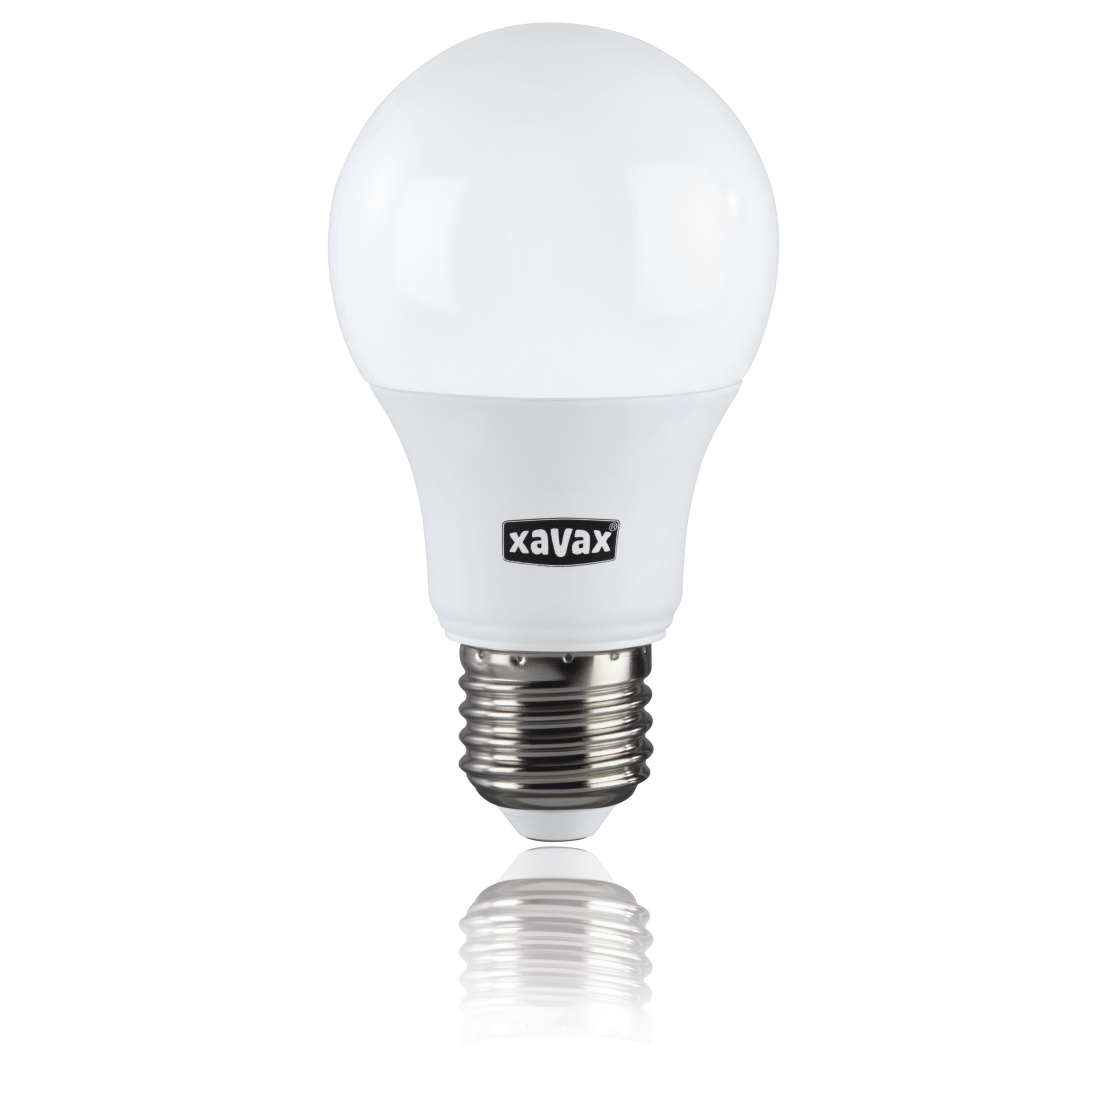 abx2 Druckfähige Abbildung 2 - Xavax, LED-Lampe, E27, 1055lm ersetzt 75W, Glühlampe, Warmweiß